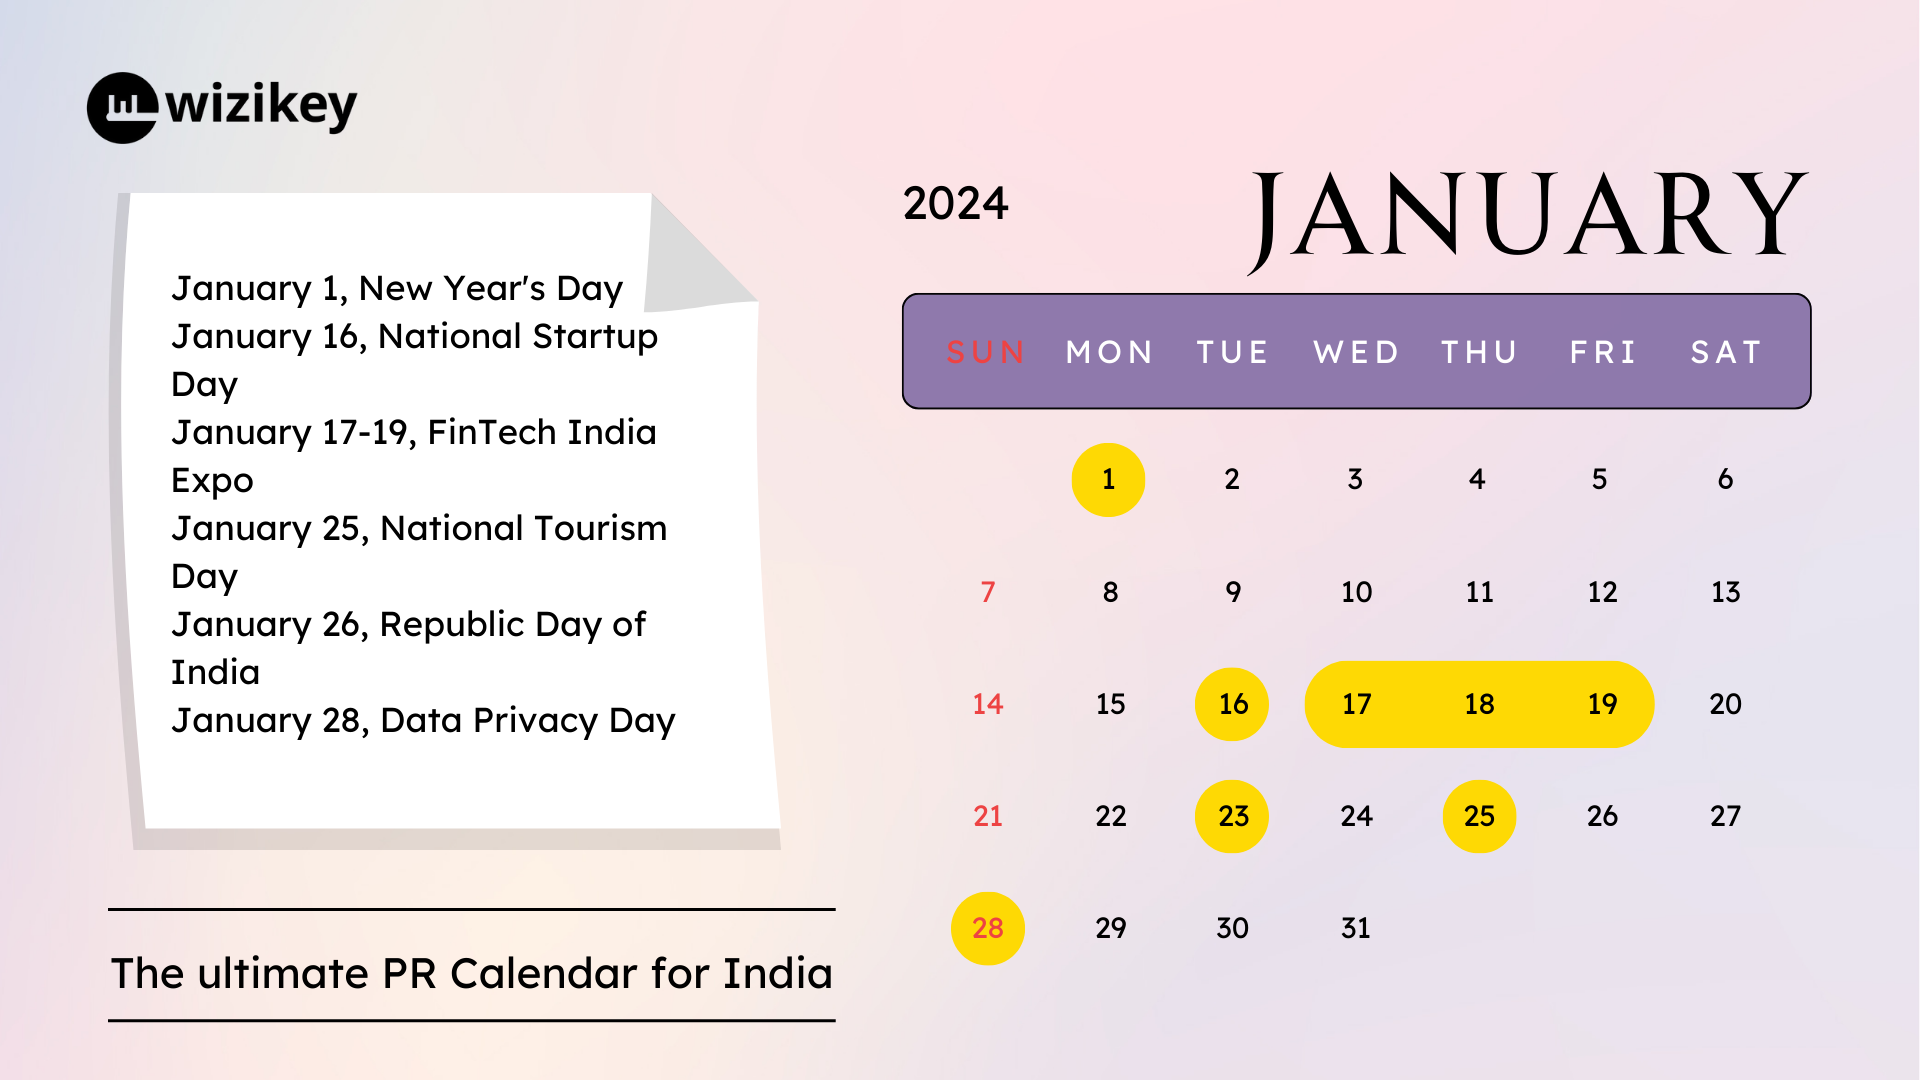 PR Calendar for January 2024